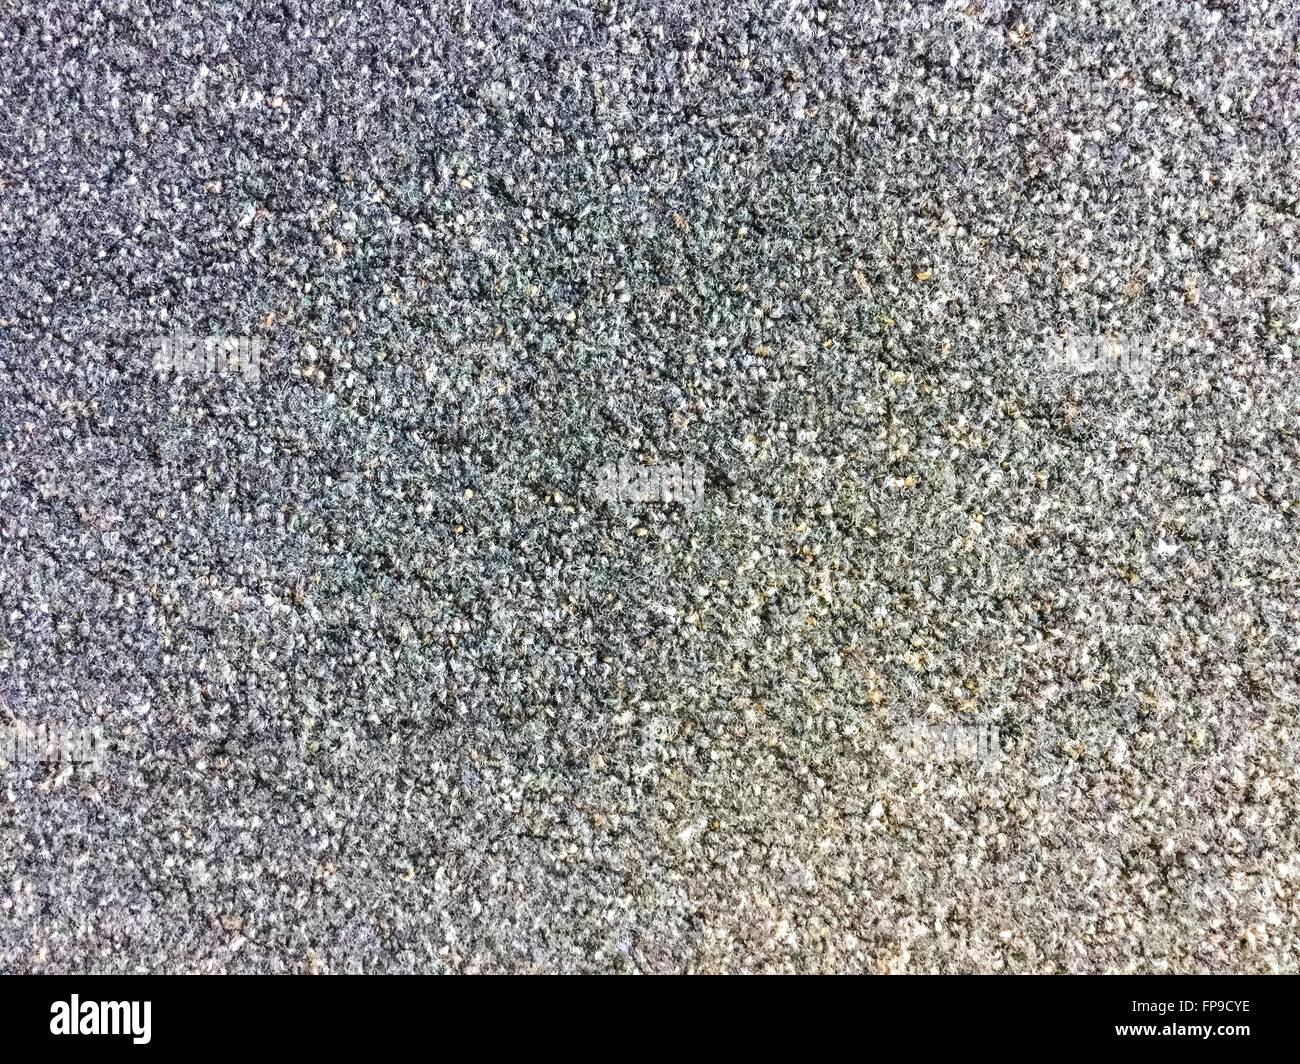 Closeup of black carpet. Carpet texture. Stock Photo